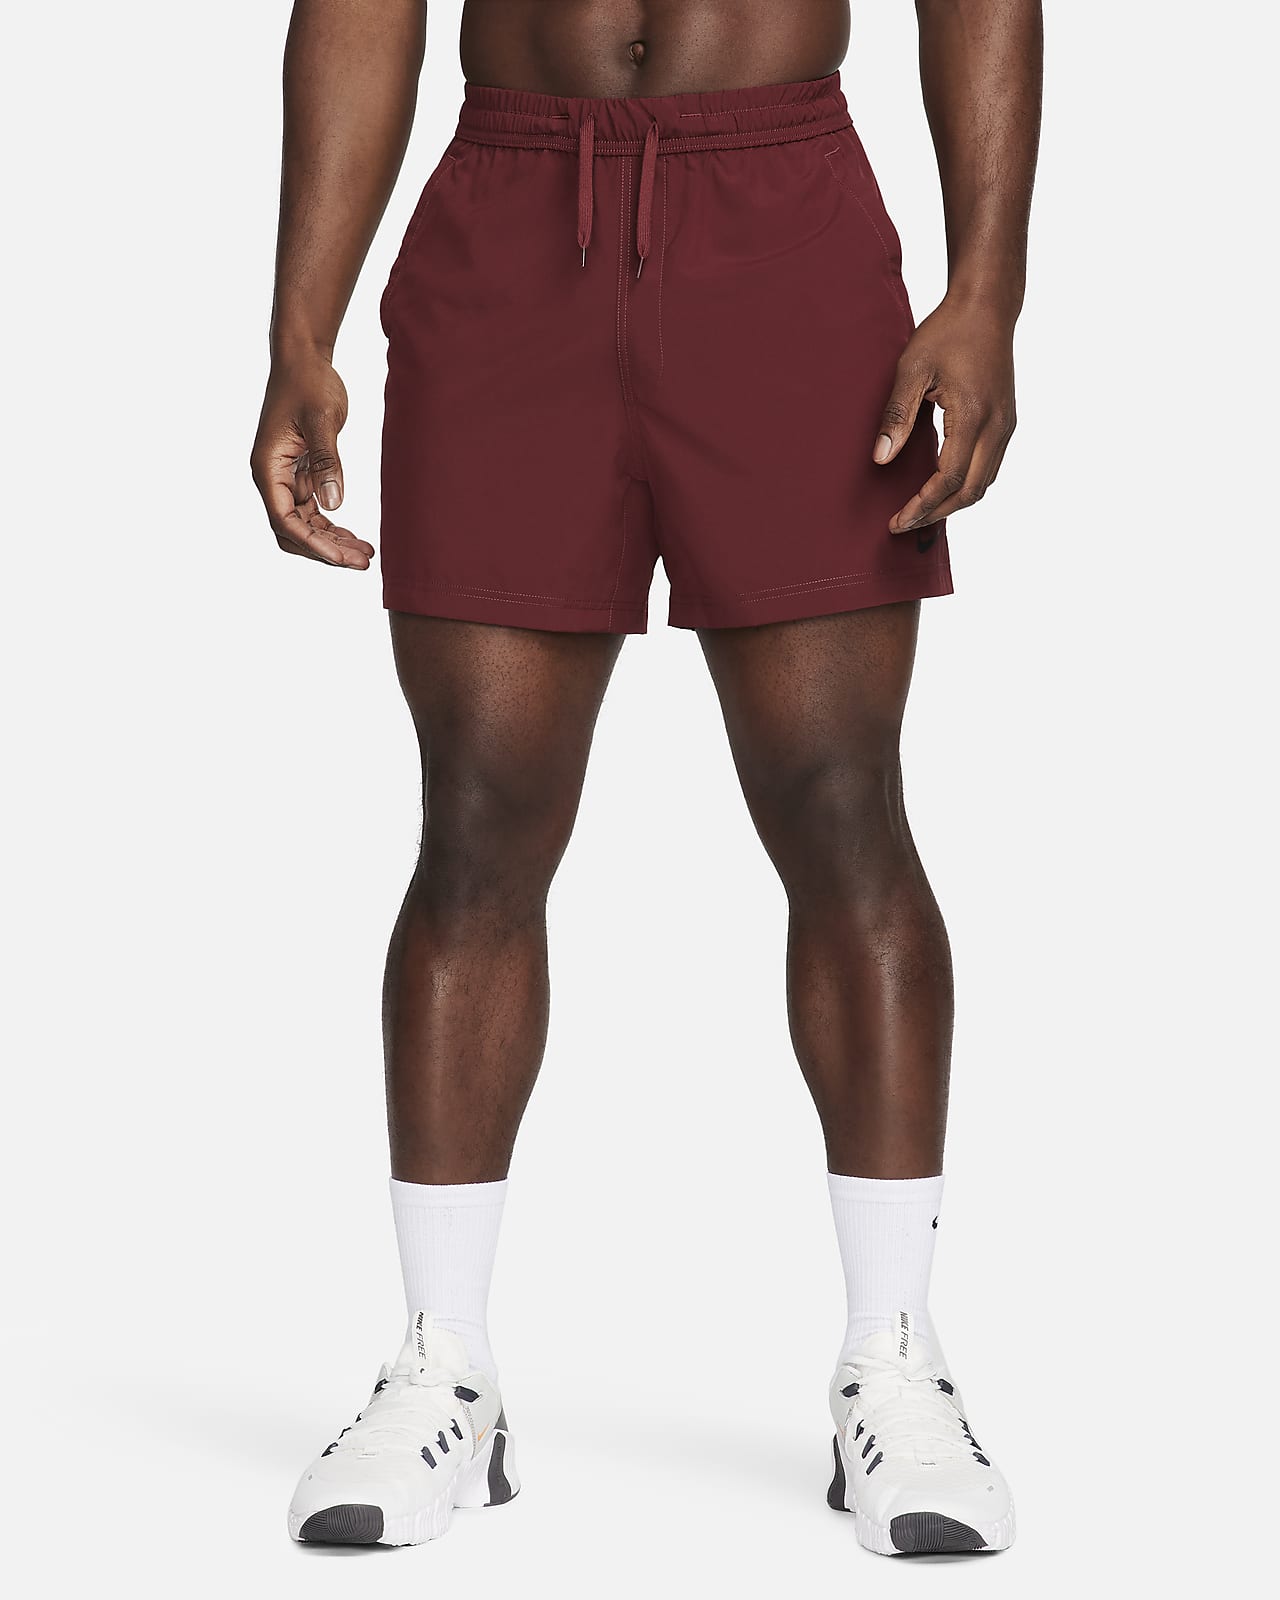 Shorts versátiles Dri-FIT de 13 cm sin forro para hombre Nike Form